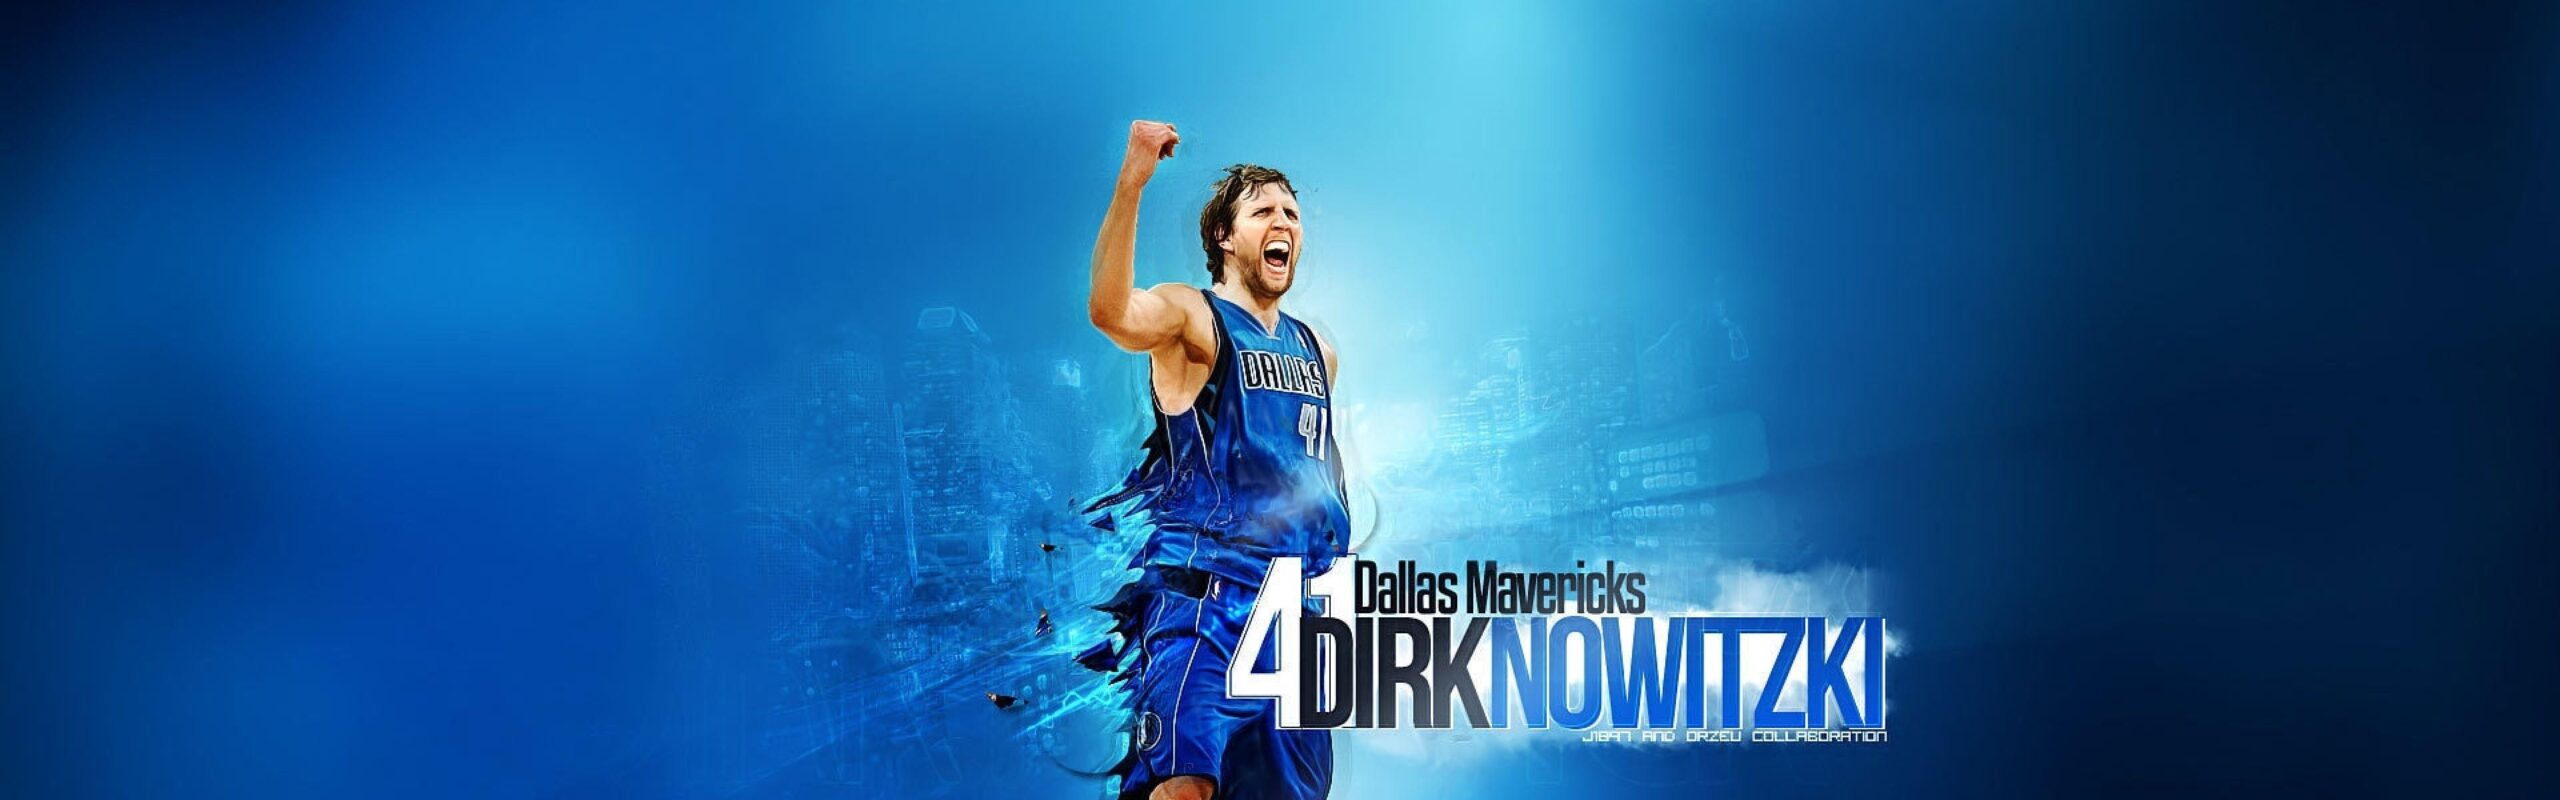 Download Wallpapers Dirk nowitzki, Basketball player